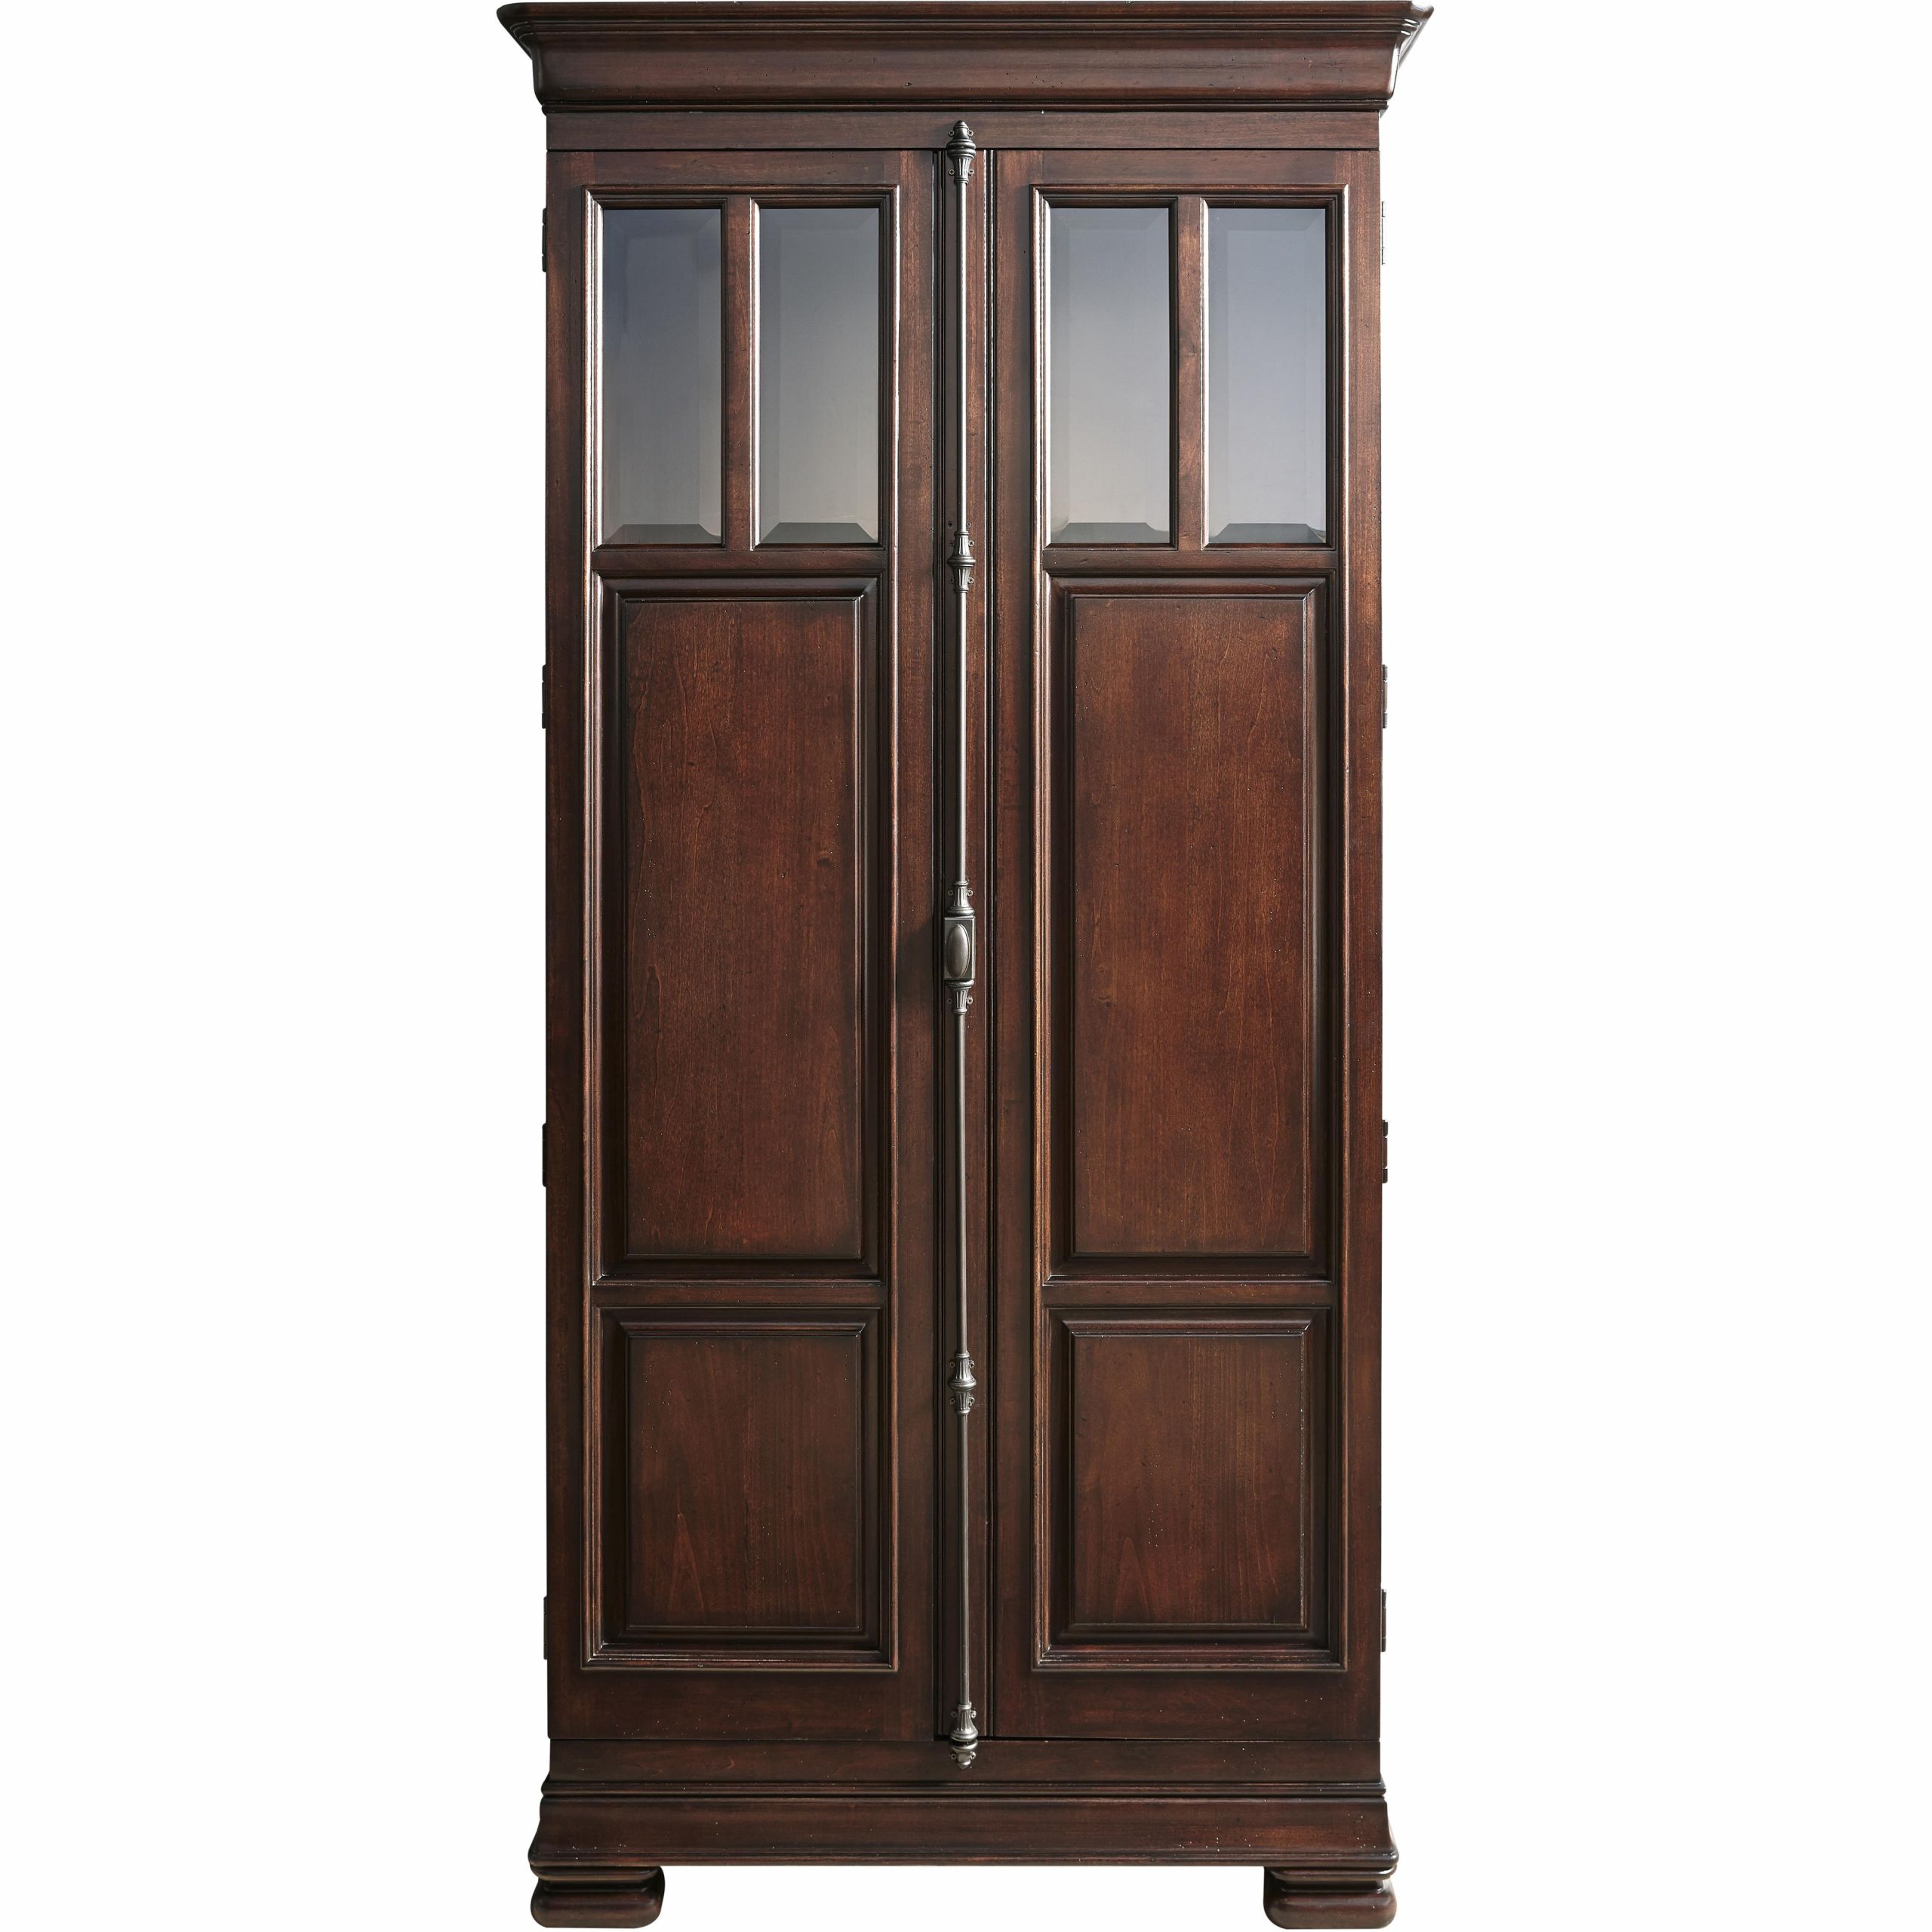 Tall Bedroom Cabinet
 Universal Reprise 2 Door Cabinet with Adjustable